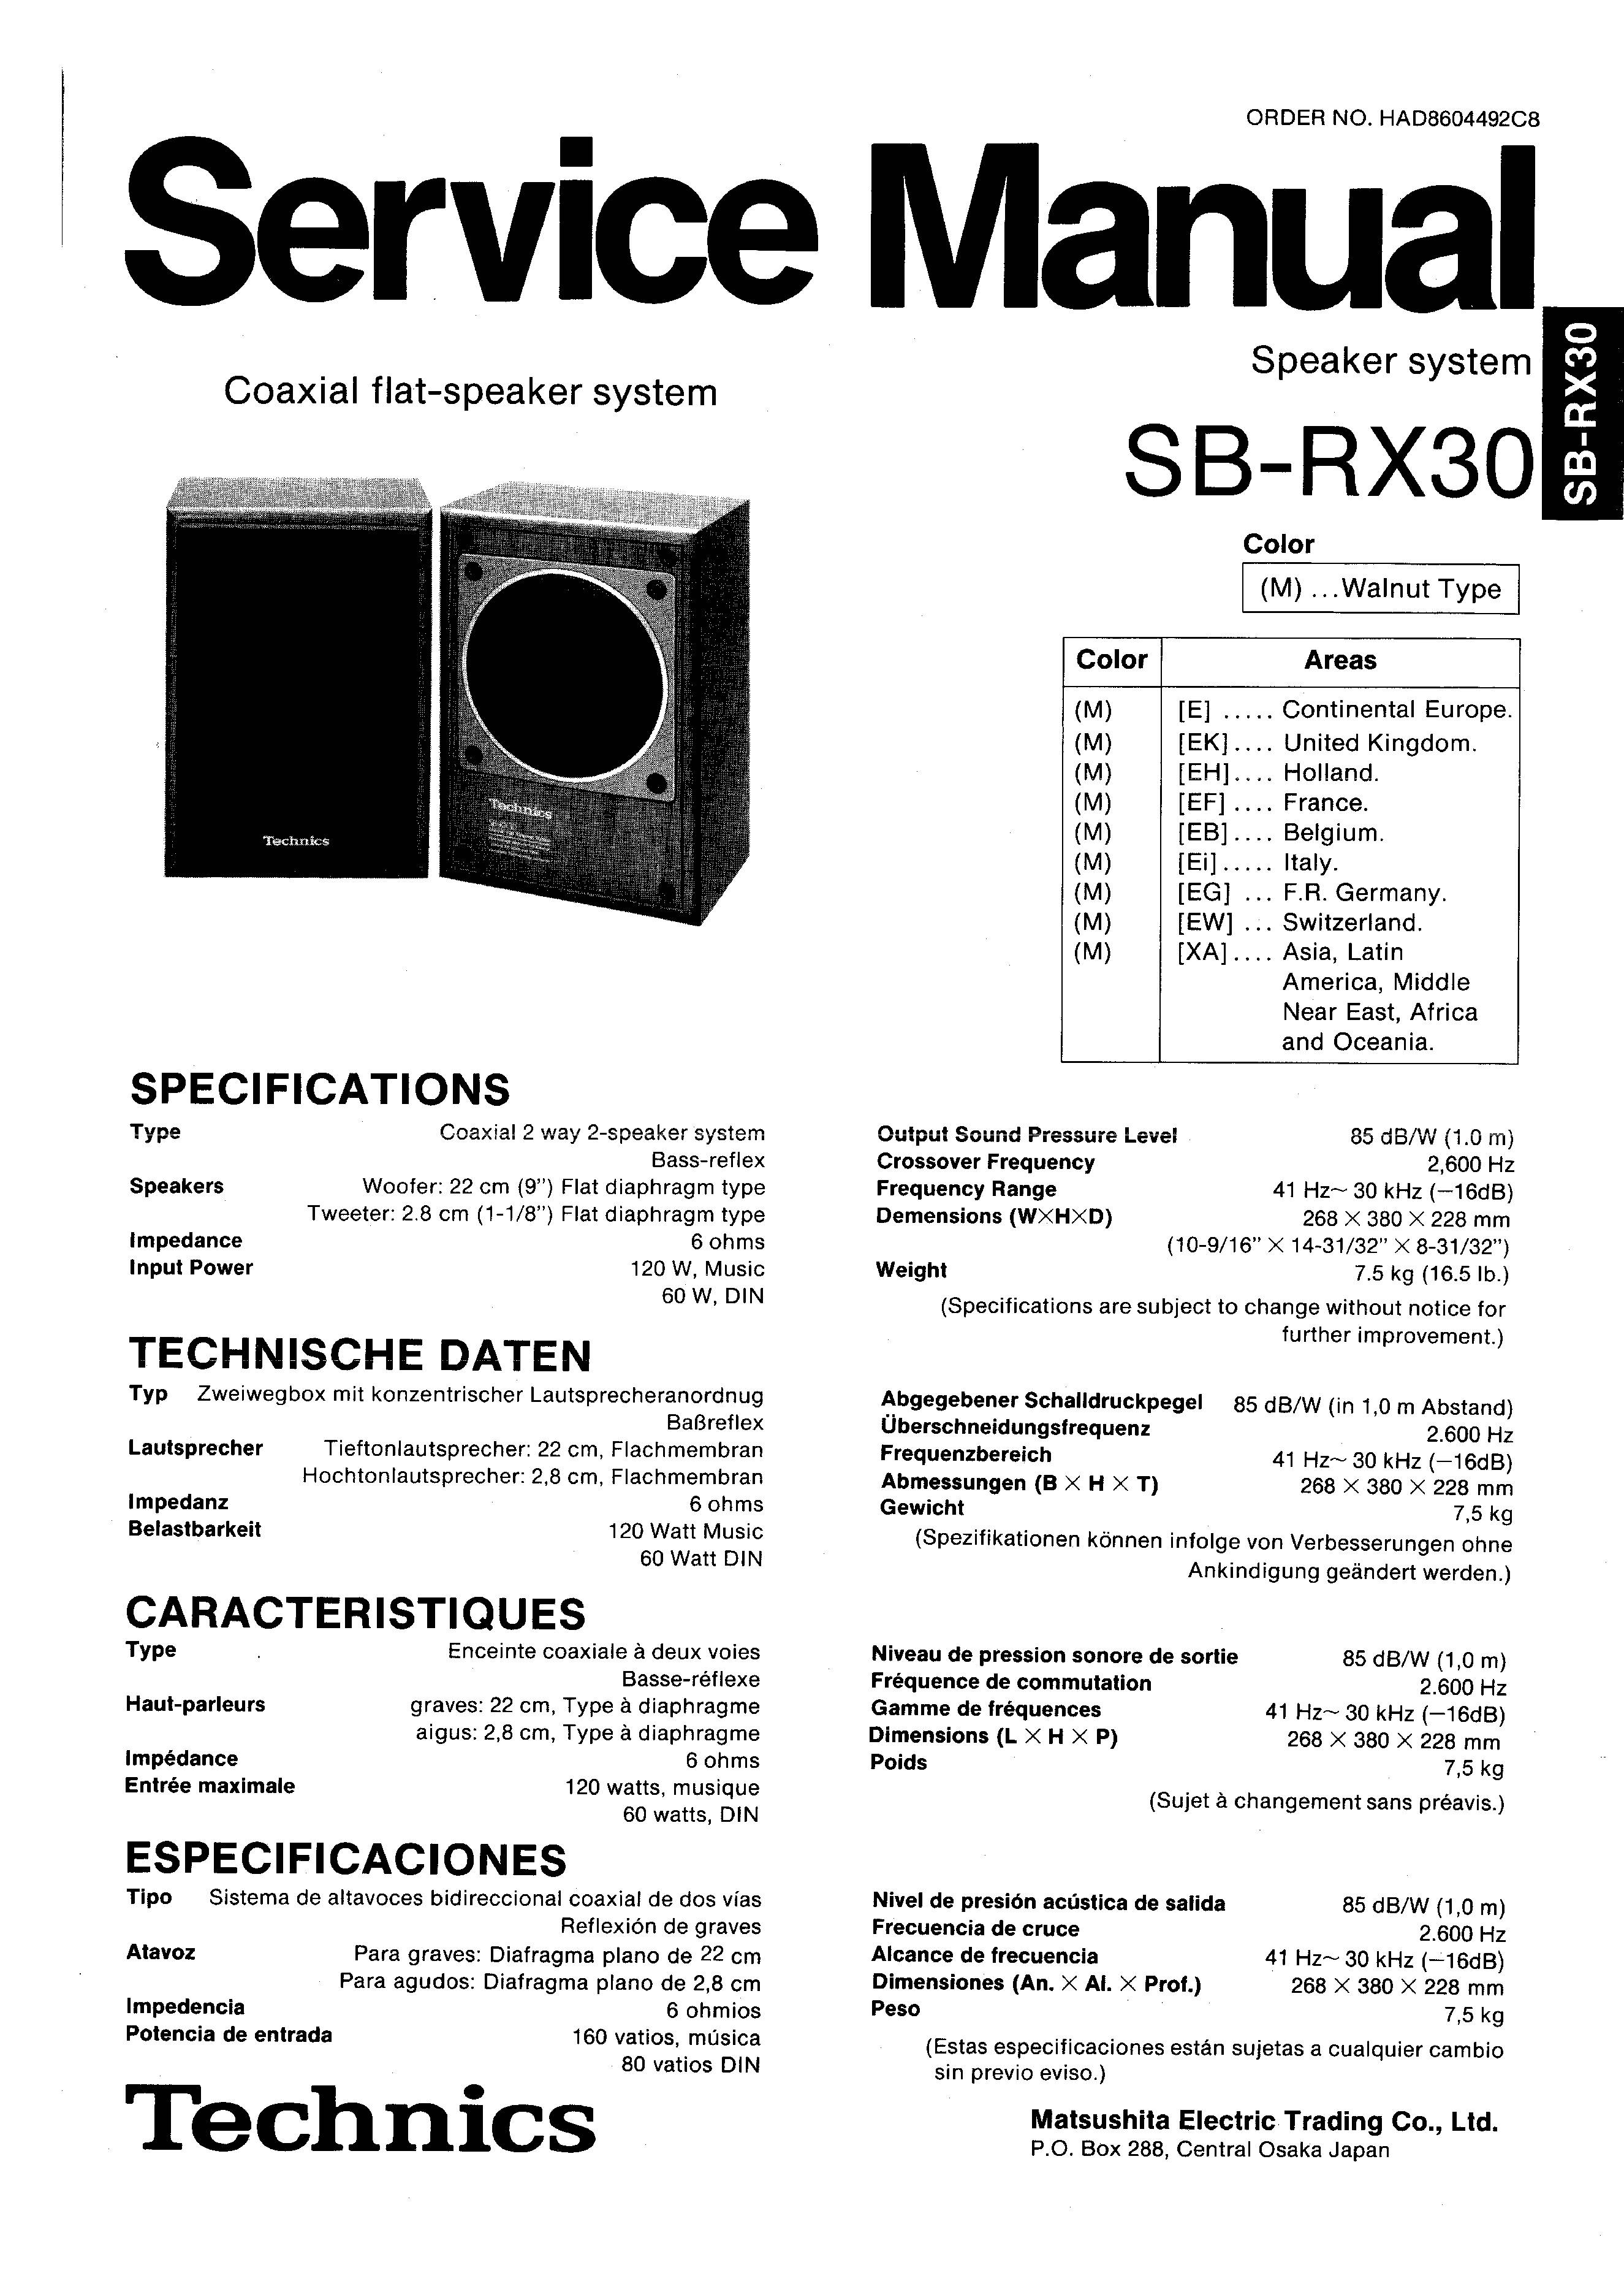 Technics SB-RX30